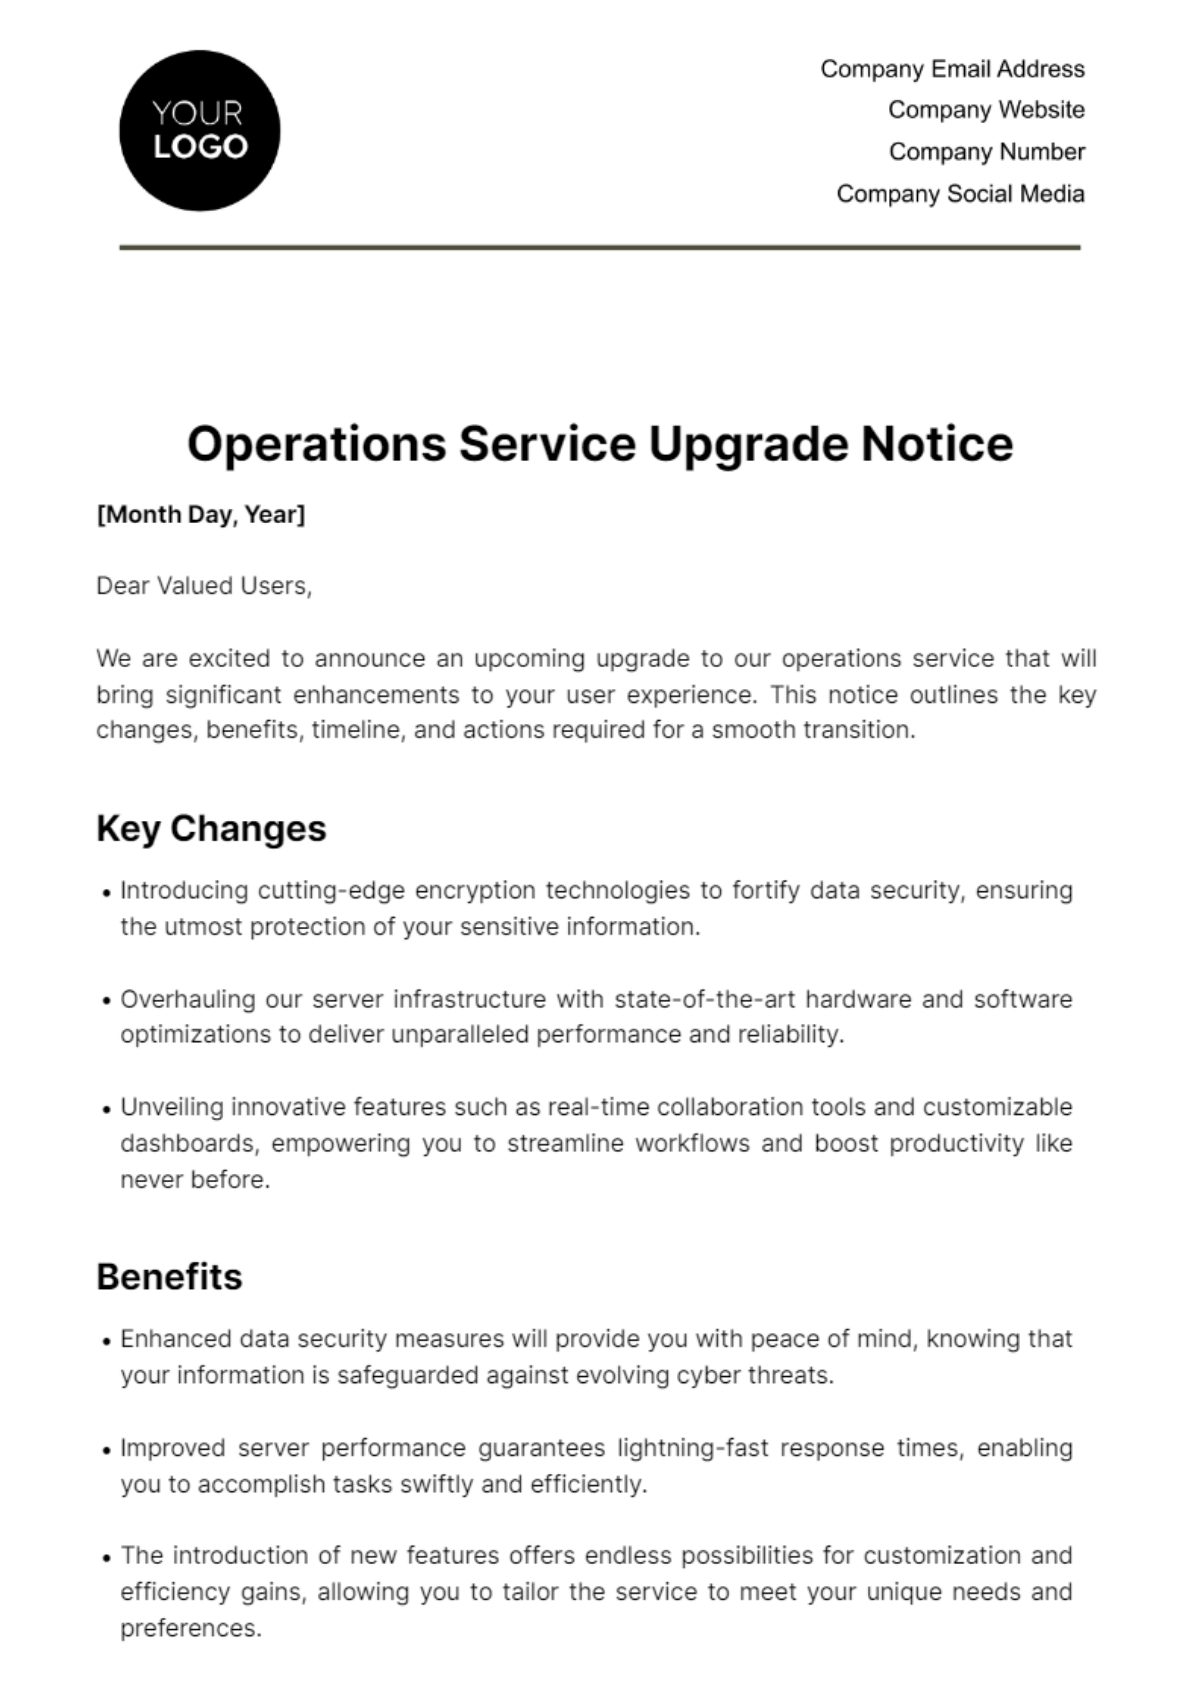 Operations Service Upgrade Notice Template